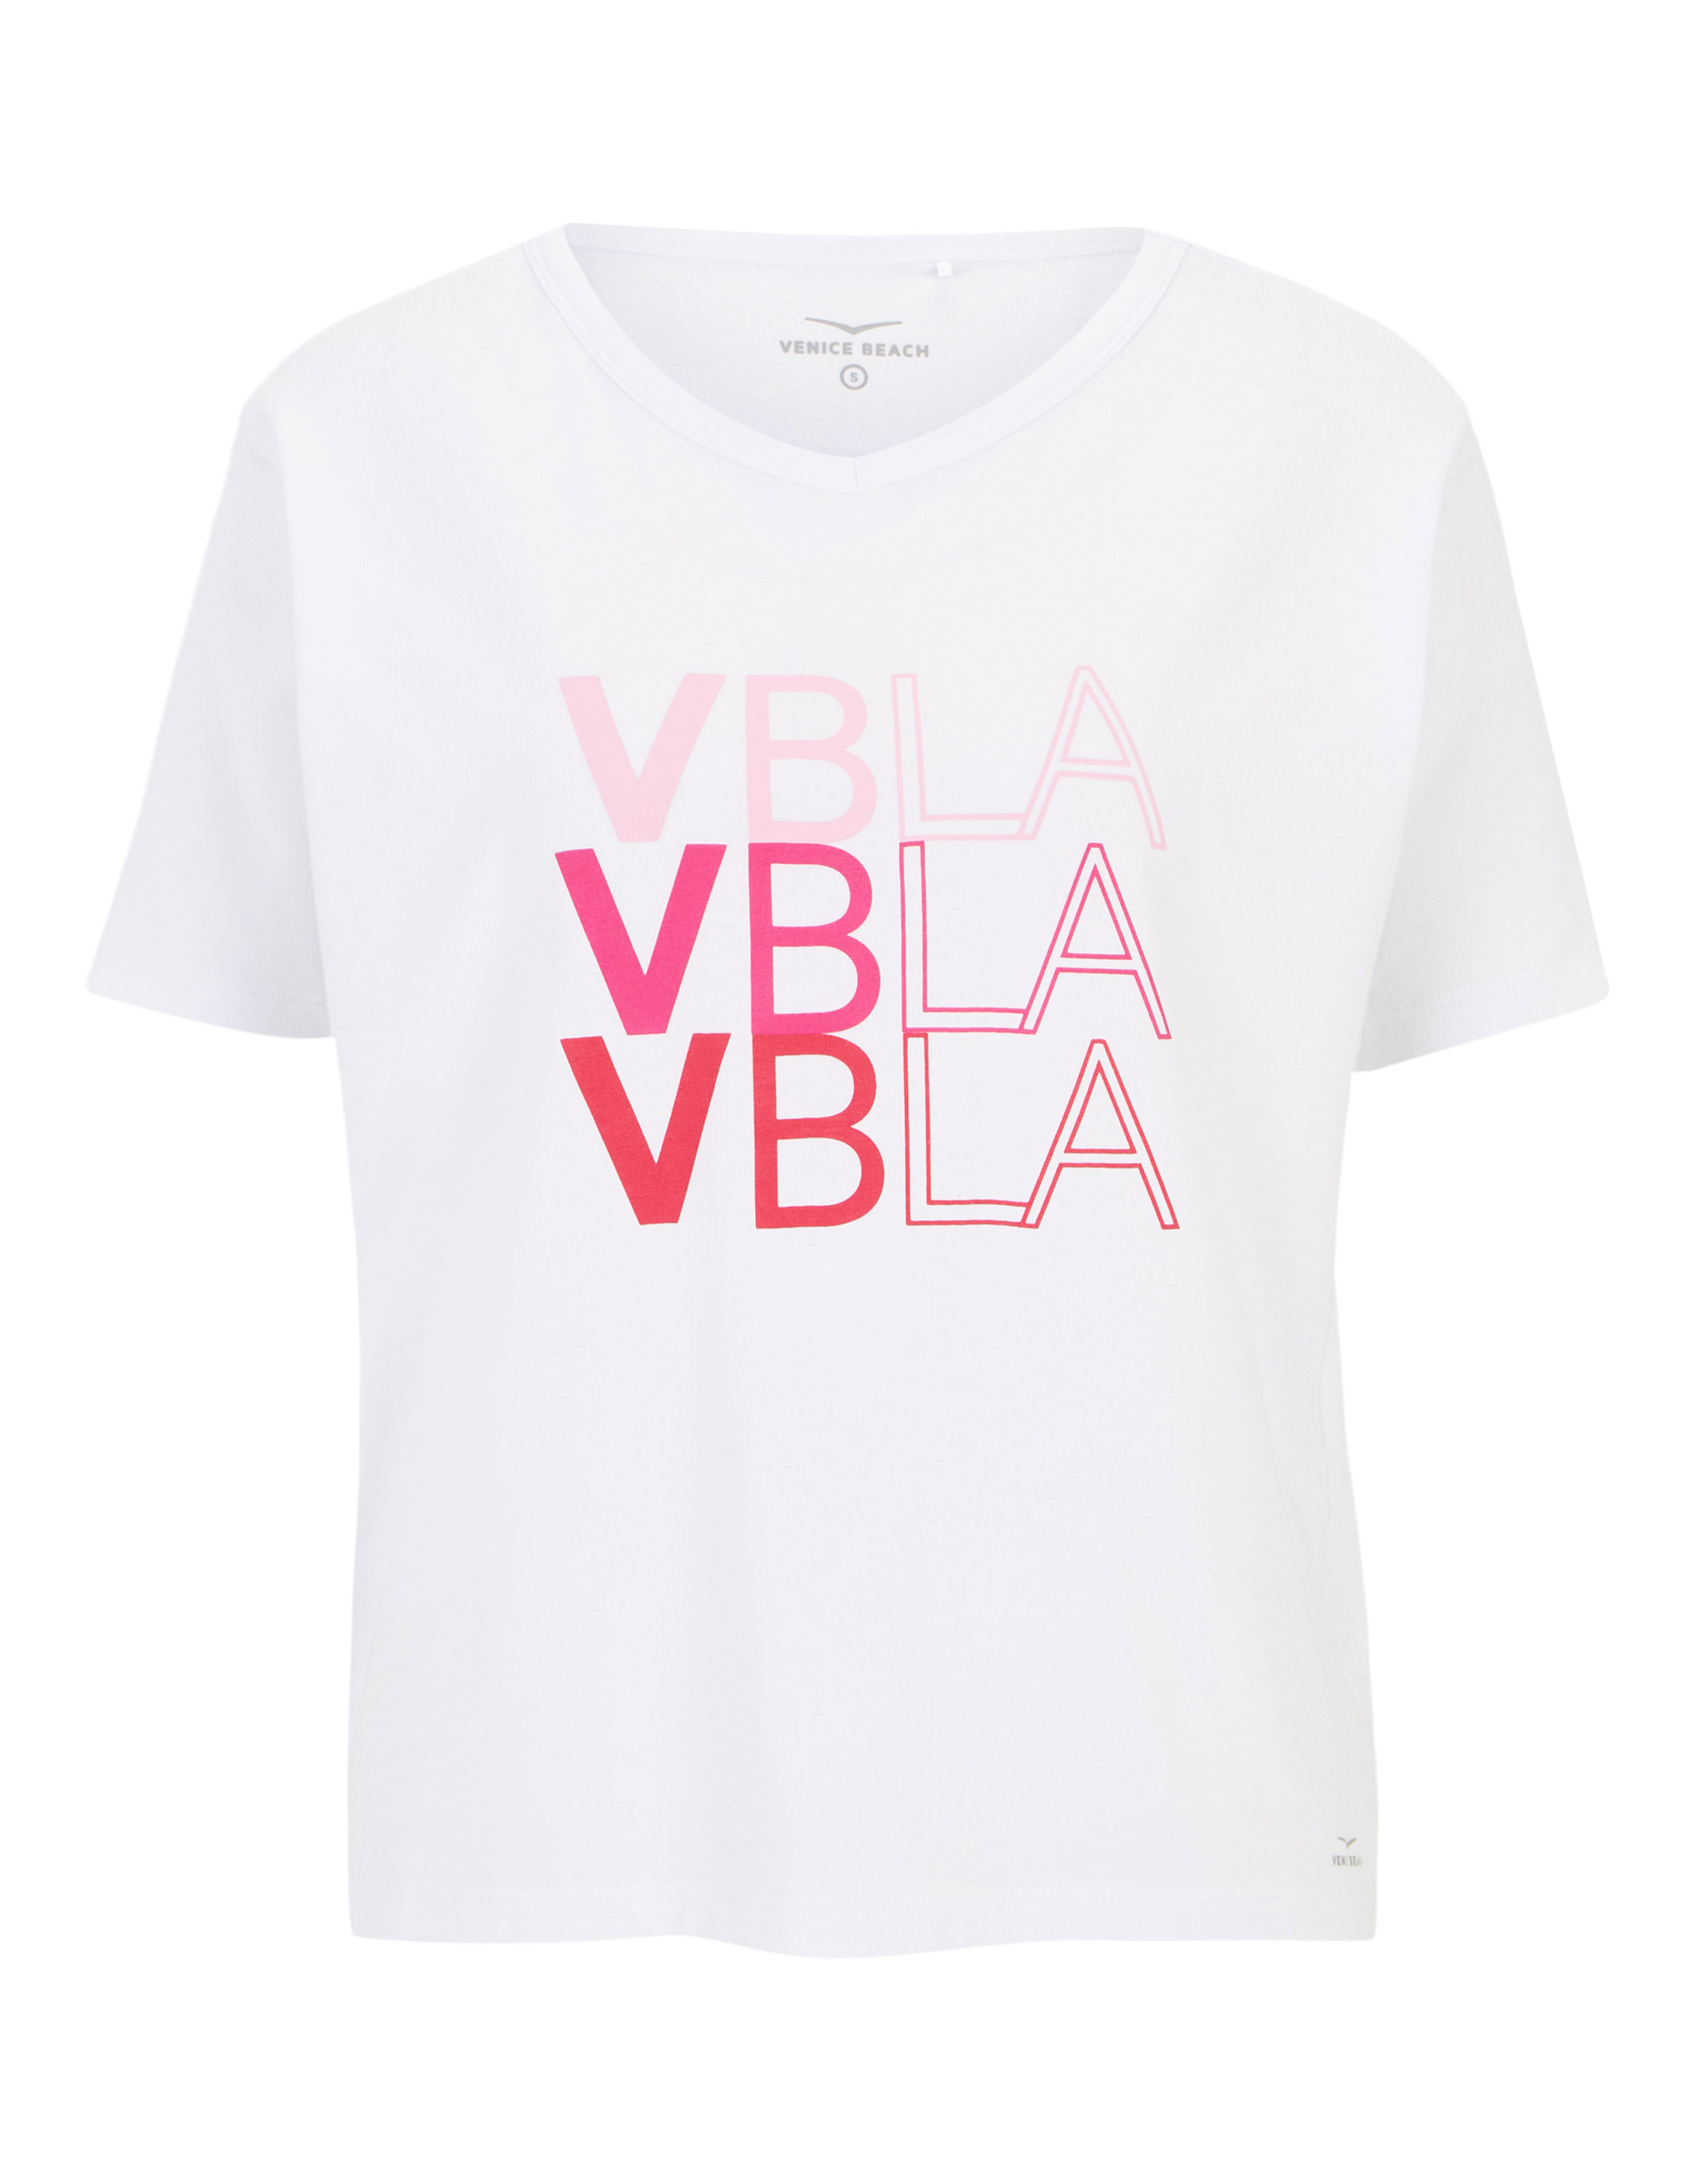 Спортивная футболка Venice Beach VB Reagan, белый